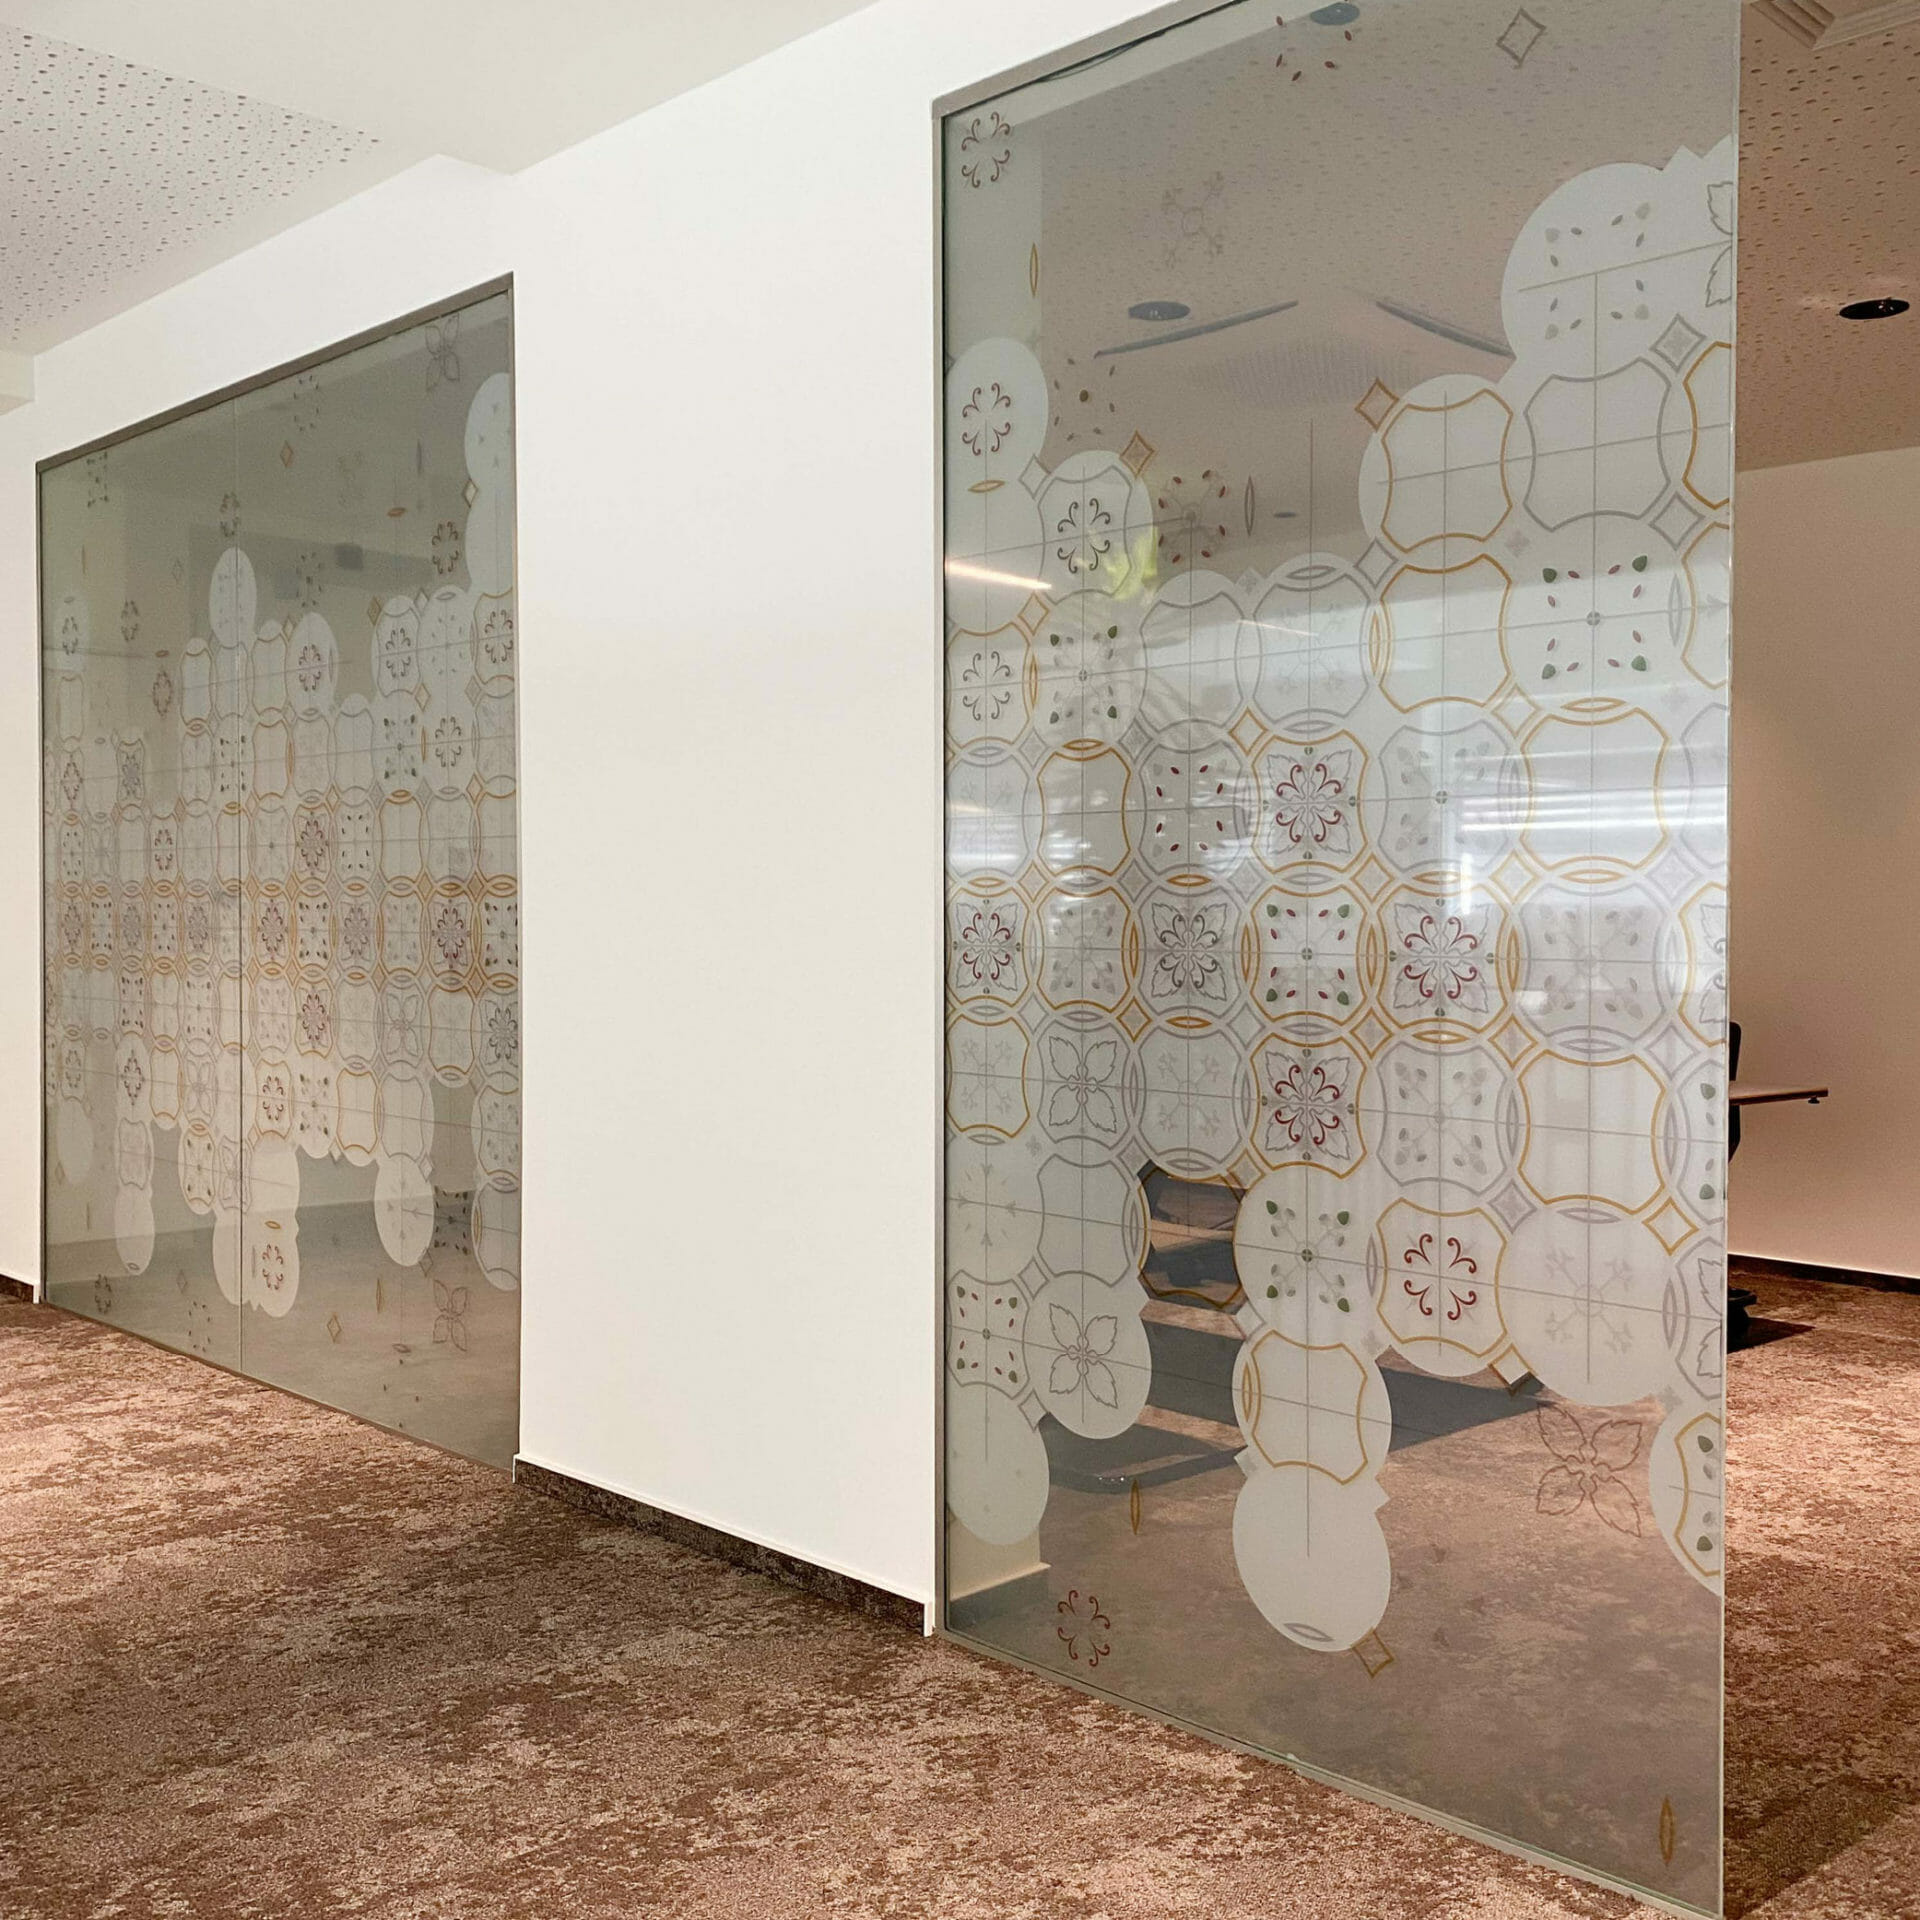 Mezzanine Meetings & Events - Switchable room glazing